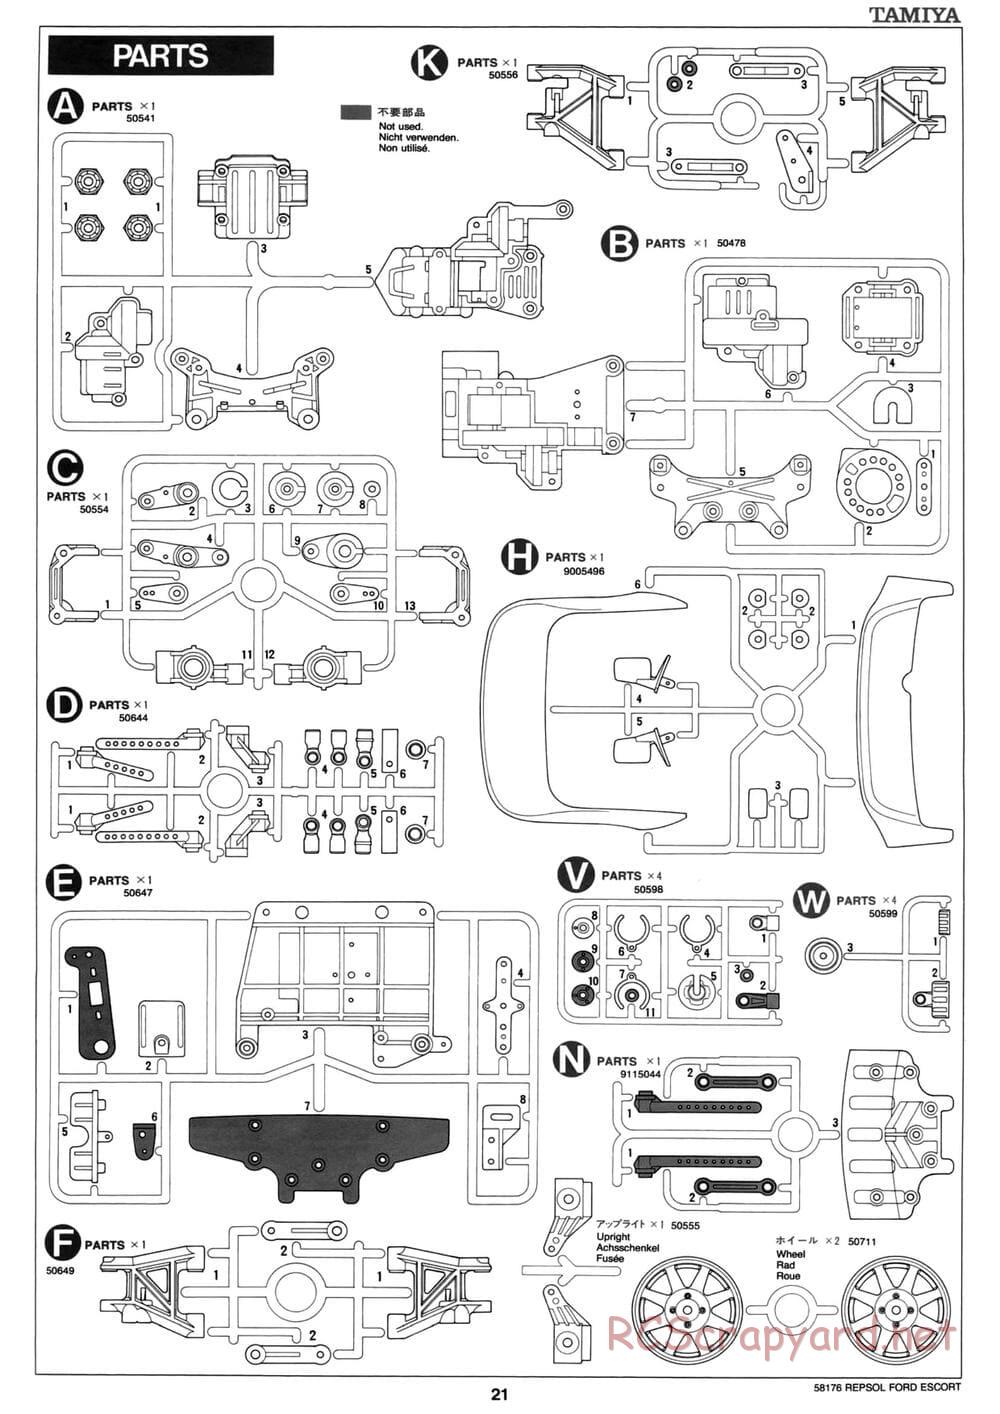 Tamiya - Repsol Ford Escort RS Cosworth - TA-02 Chassis - Manual - Page 21